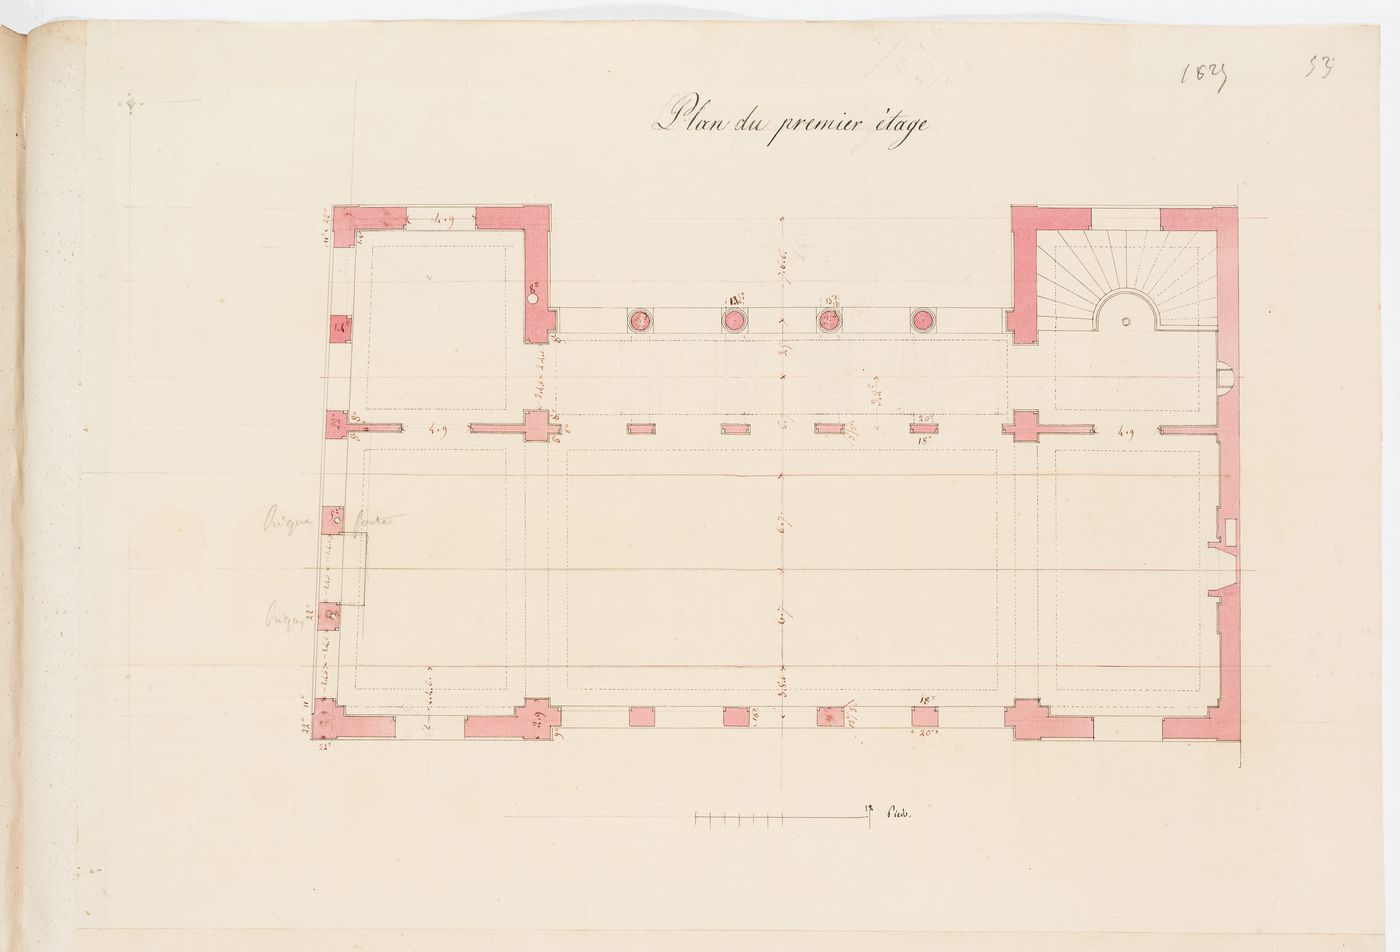 First floor plan of a "guinguette"